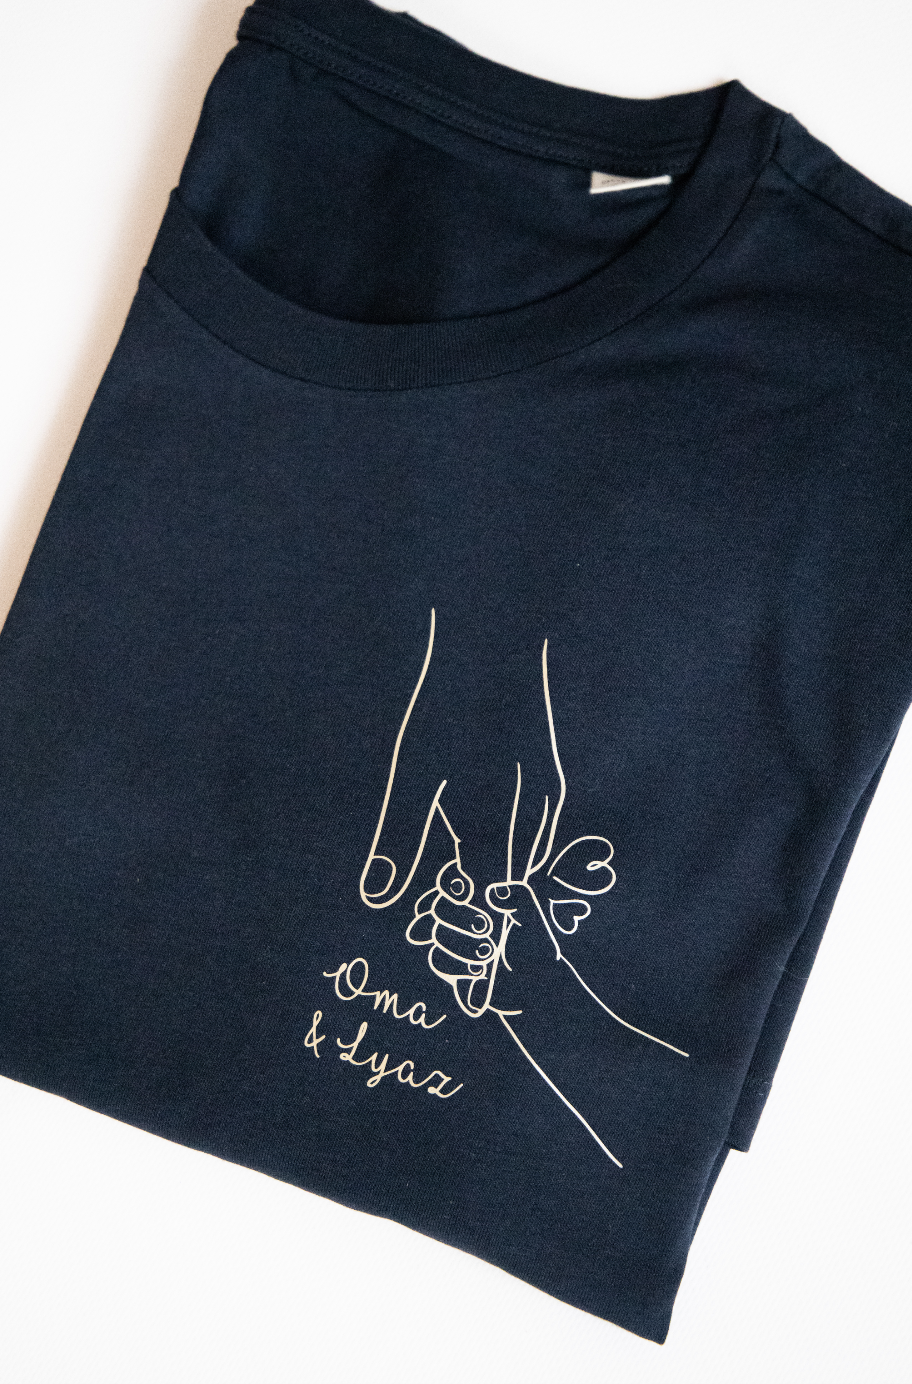 Unisex t-shirt 170gr - eigen ontwerp (bedrukt)